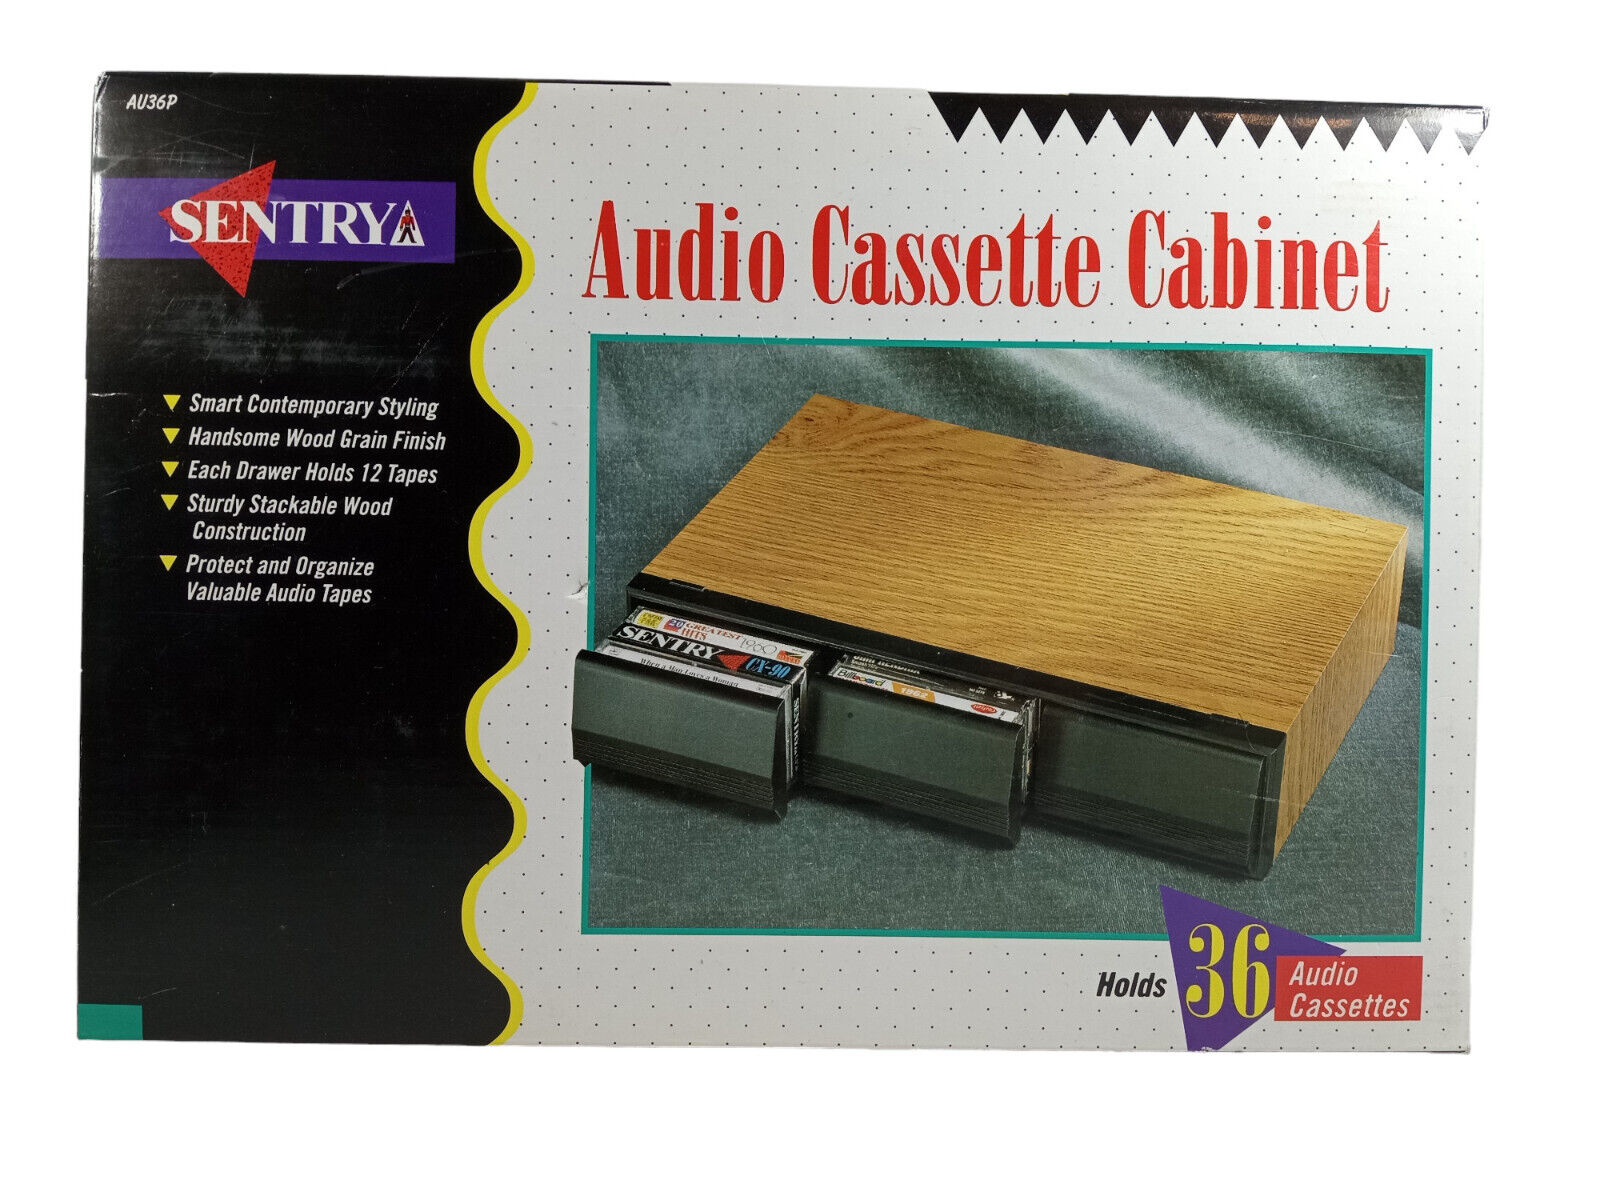 Vintage Wood Grain Sentry Brand 36 Audio Cassette Storage Cabinet